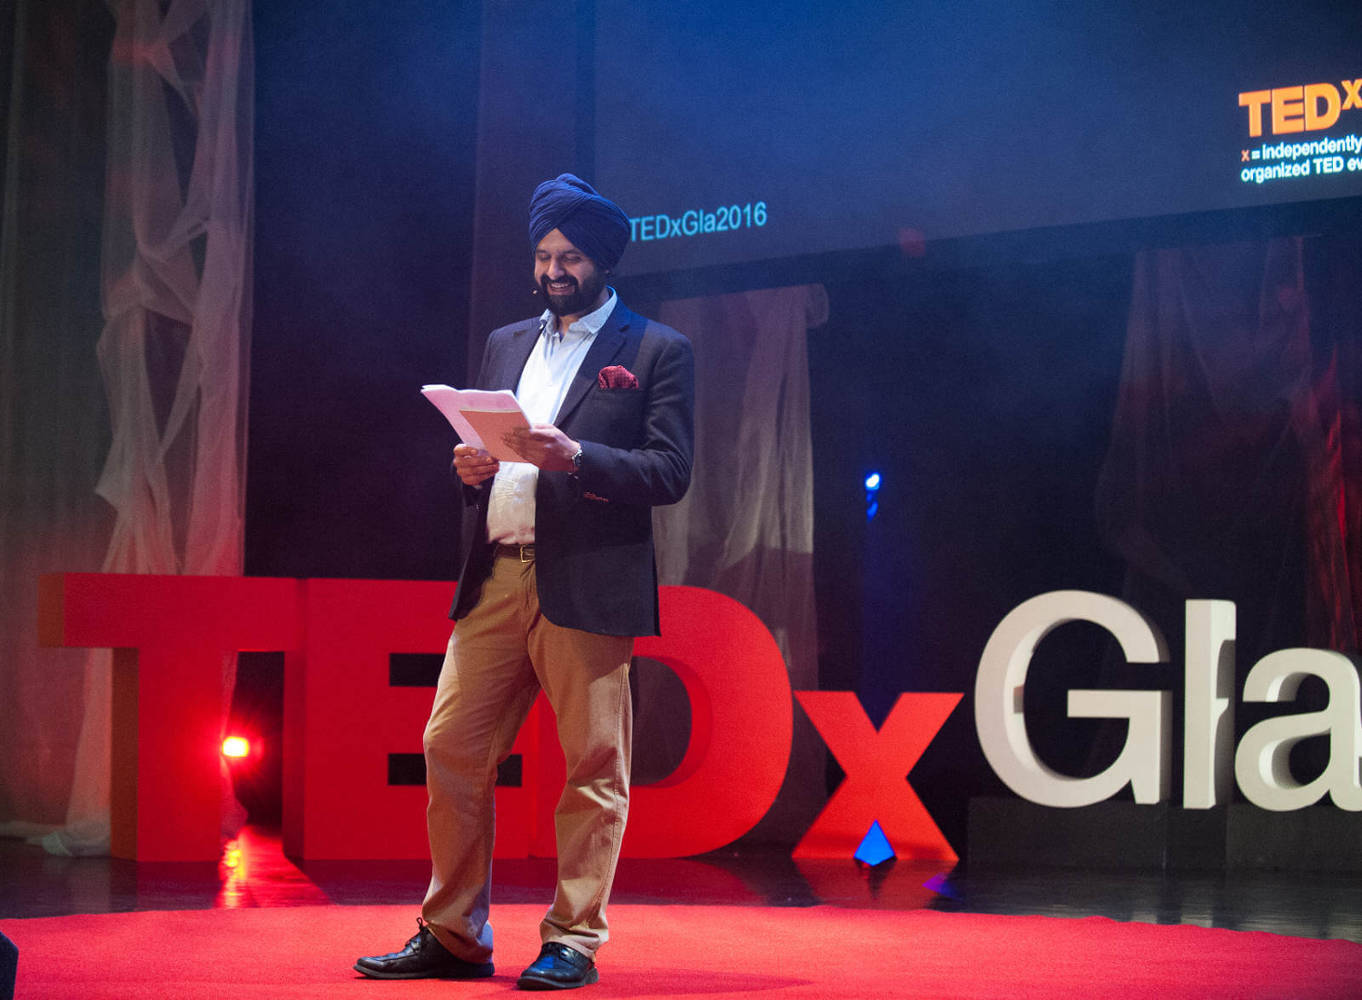 Gujirit Sing Lalli TEDX organiser